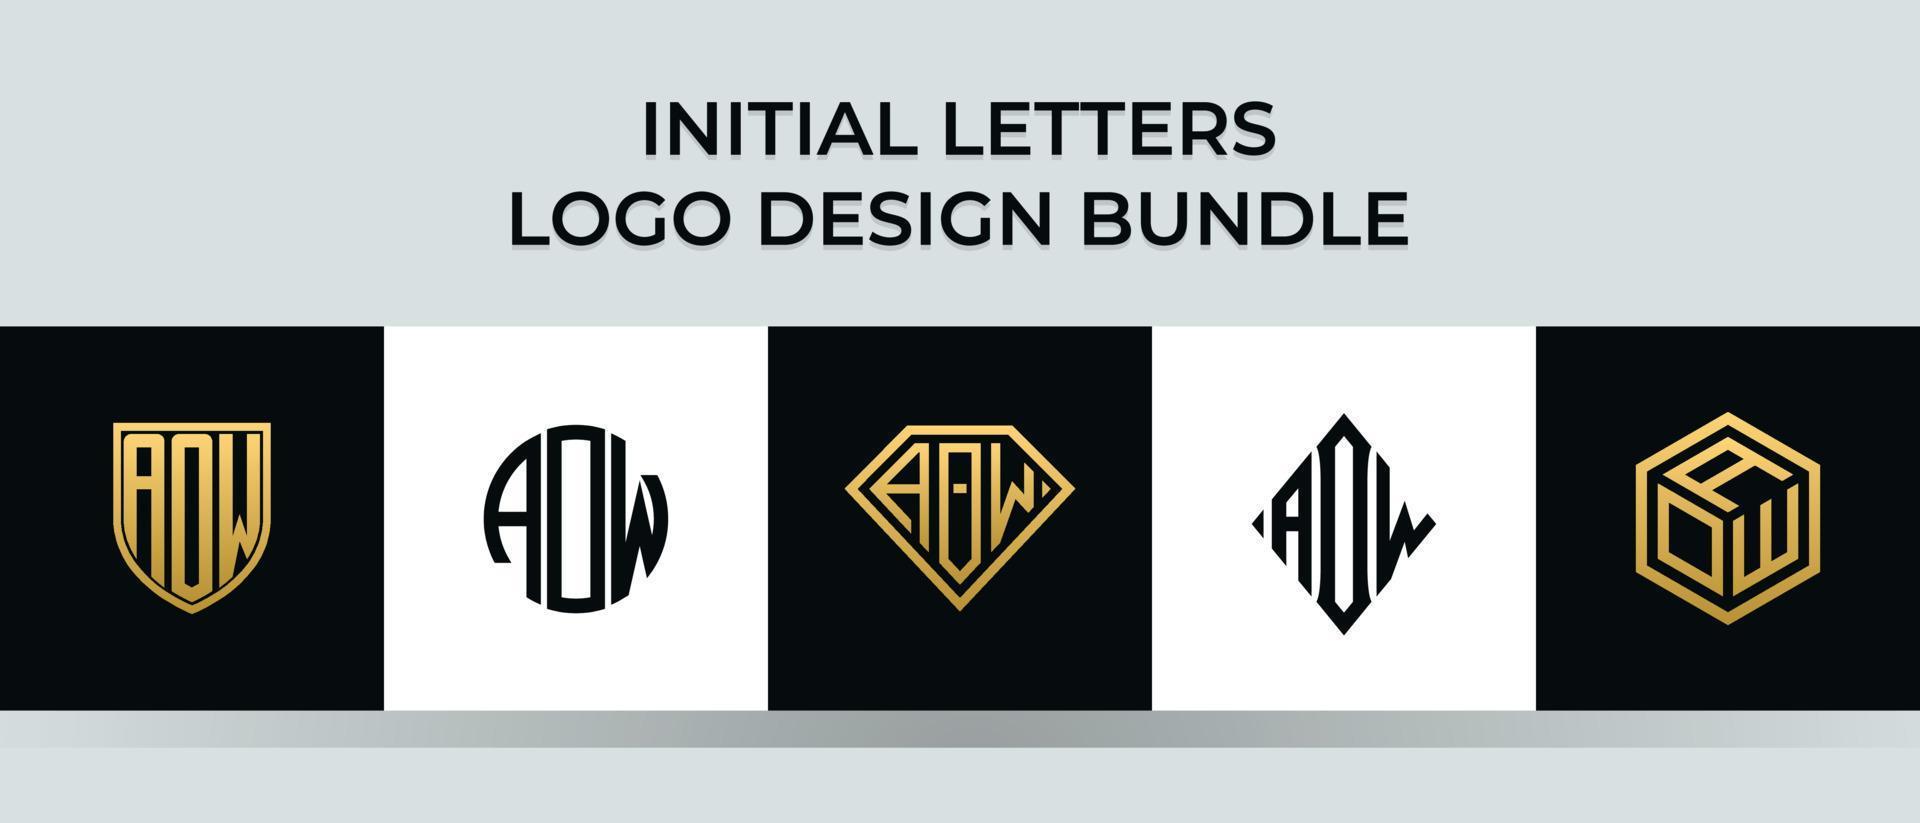 Anfangsbuchstaben Aow Logo Designs Bundle vektor